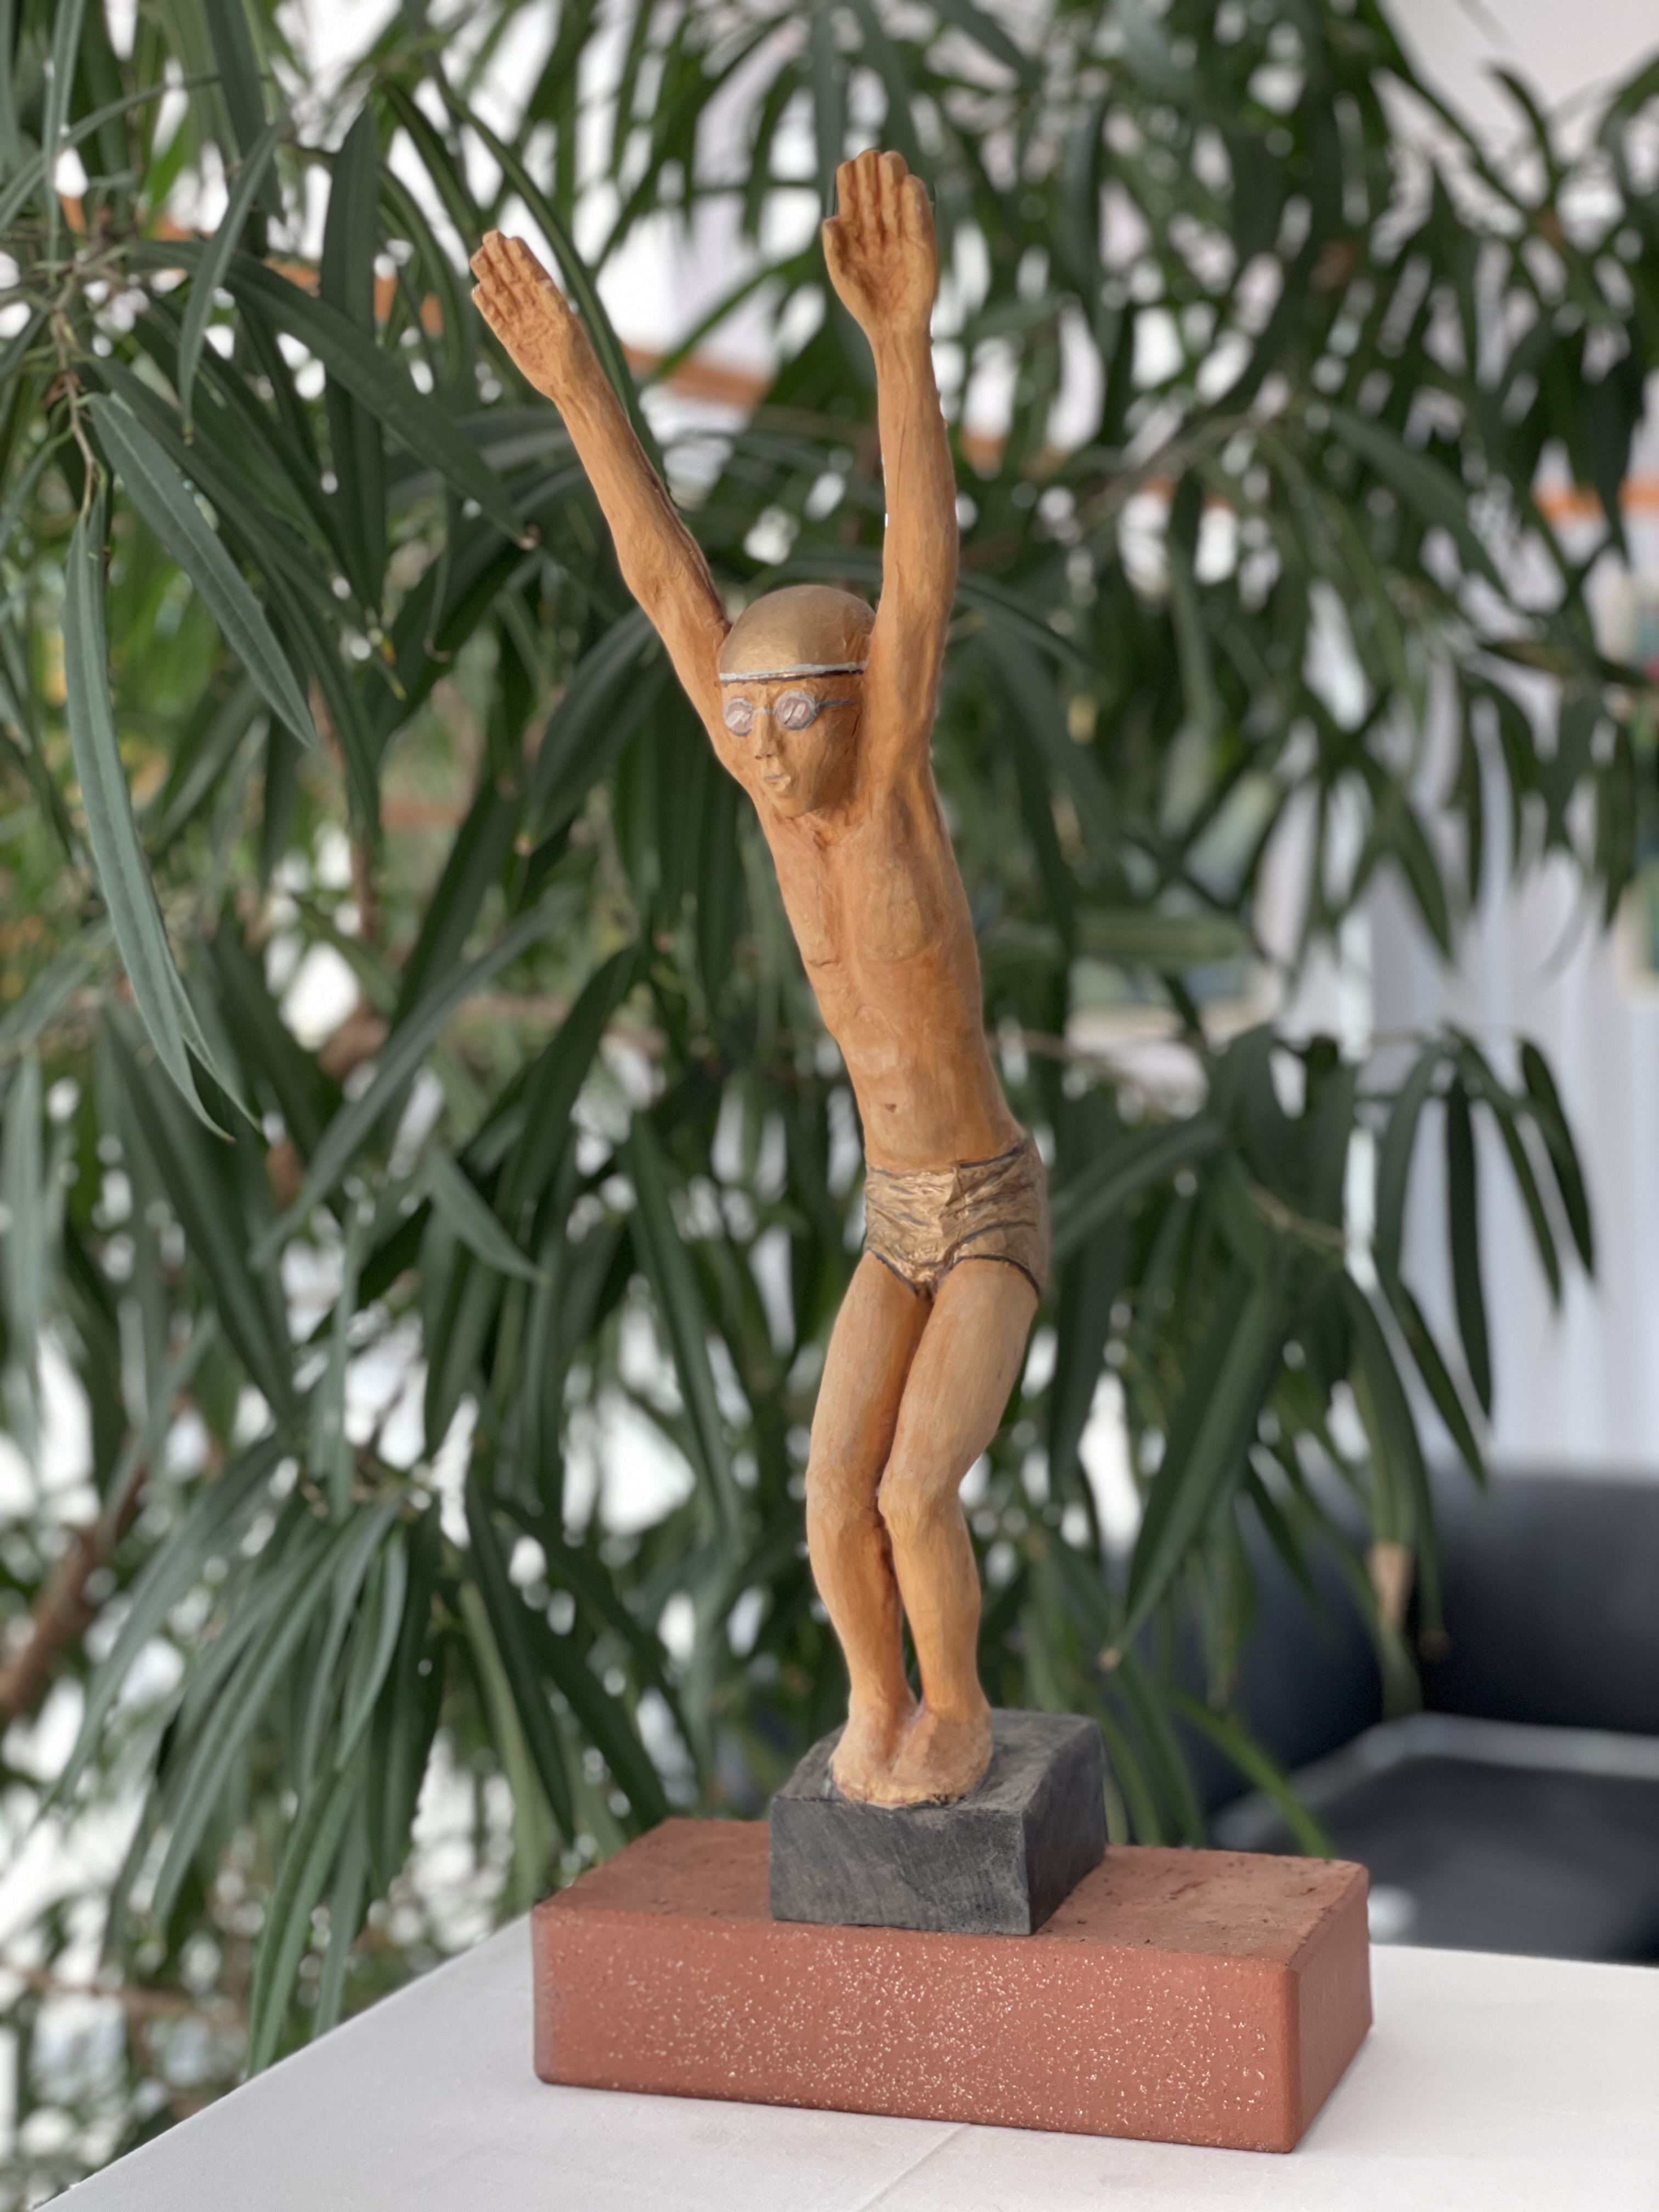 Material: Holz, Hartriegel, 41cm hoch, Preis: 480,00 €